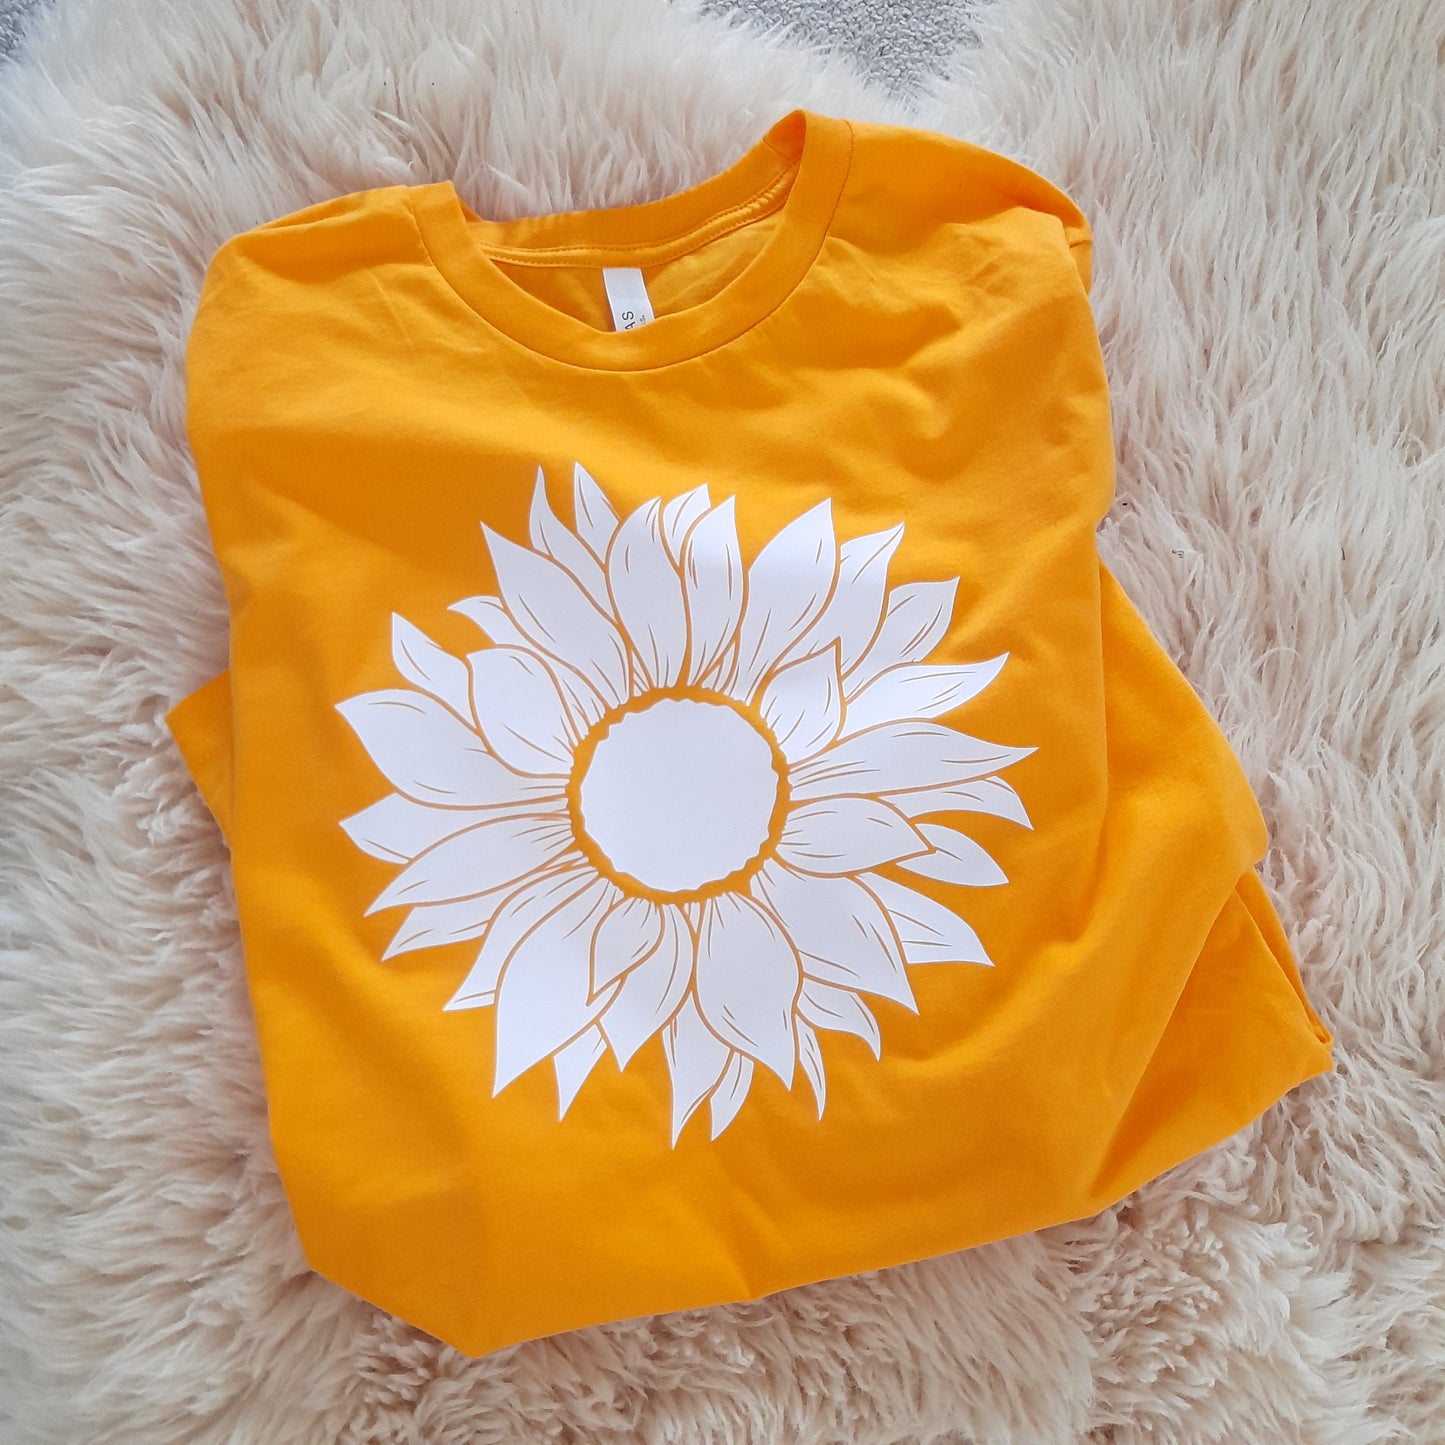 Summer tshirt with sunflower print